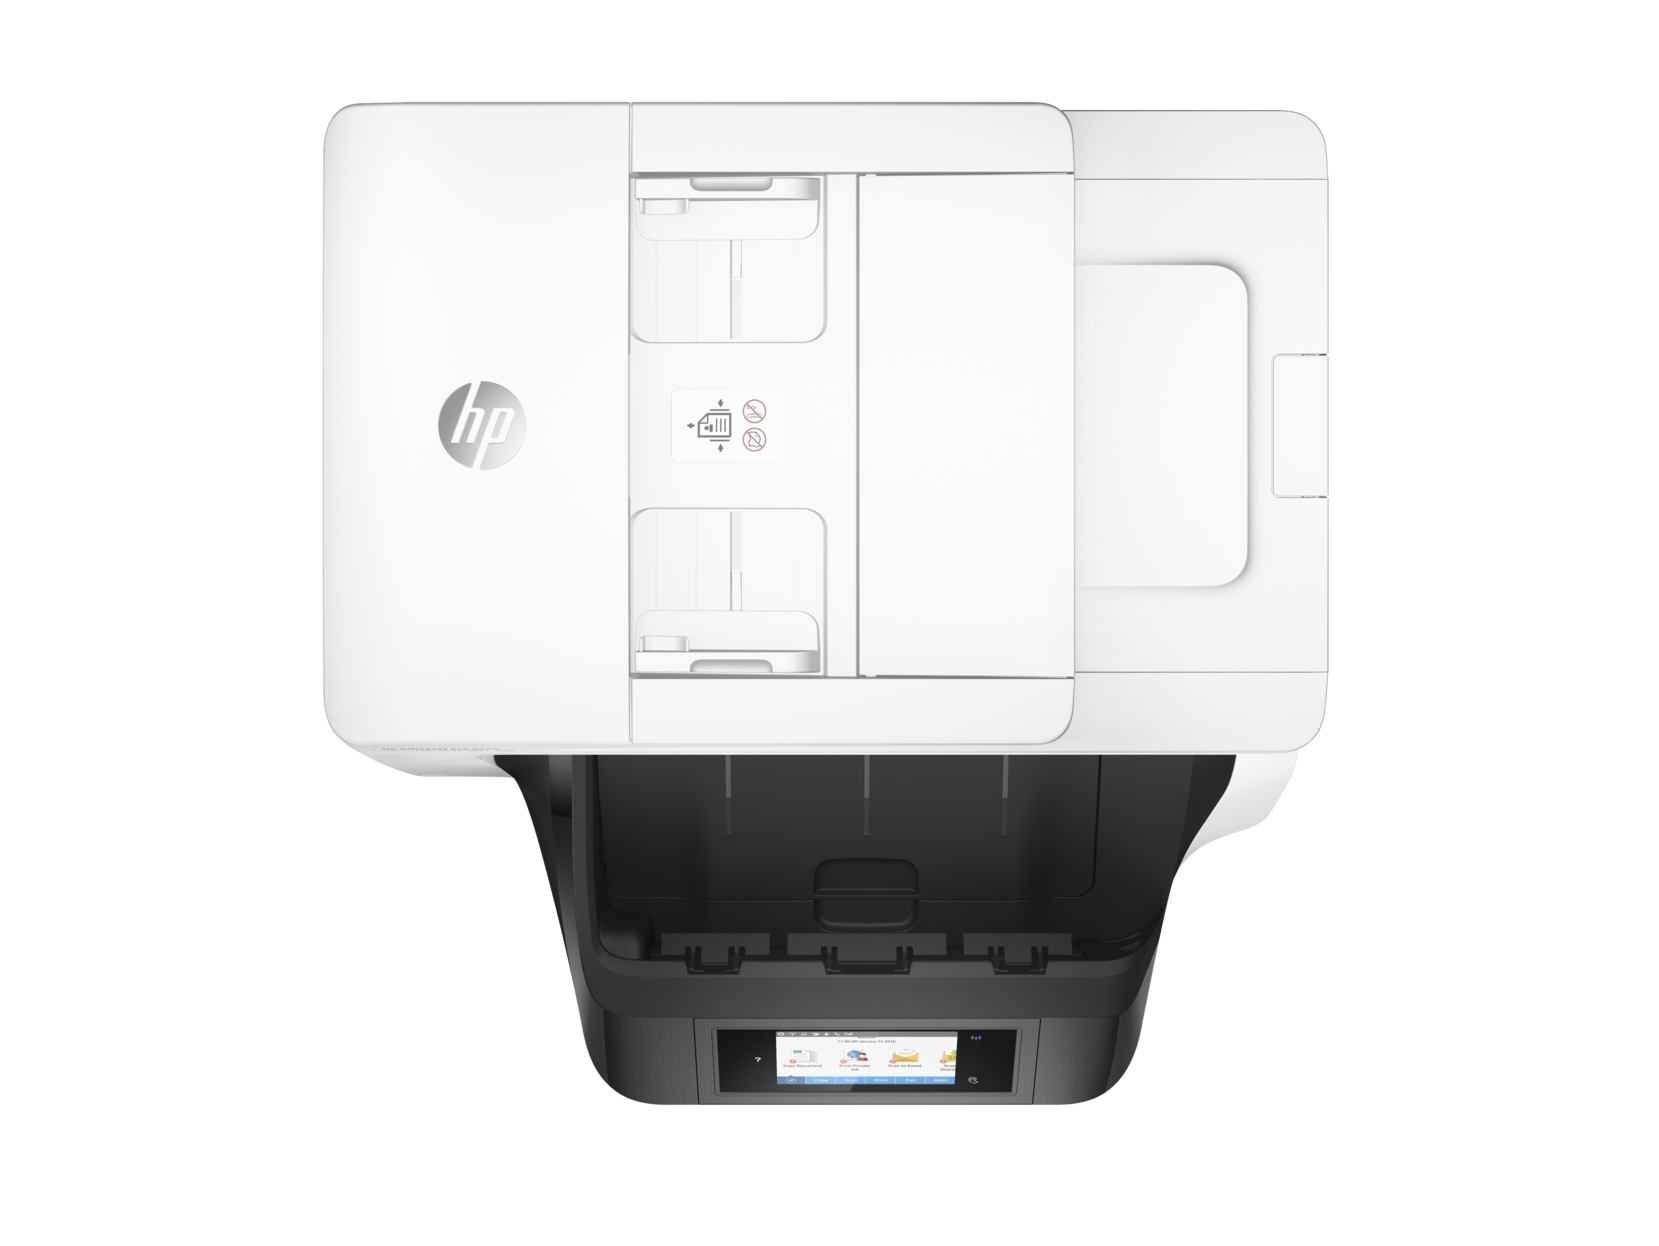 Impresora Hp Officejet pro 8730 rj11 de tinta wifi multifuncion aio color a4 copia escanea fax compatible con instant ink 200 x dpi 600 1200 216 356